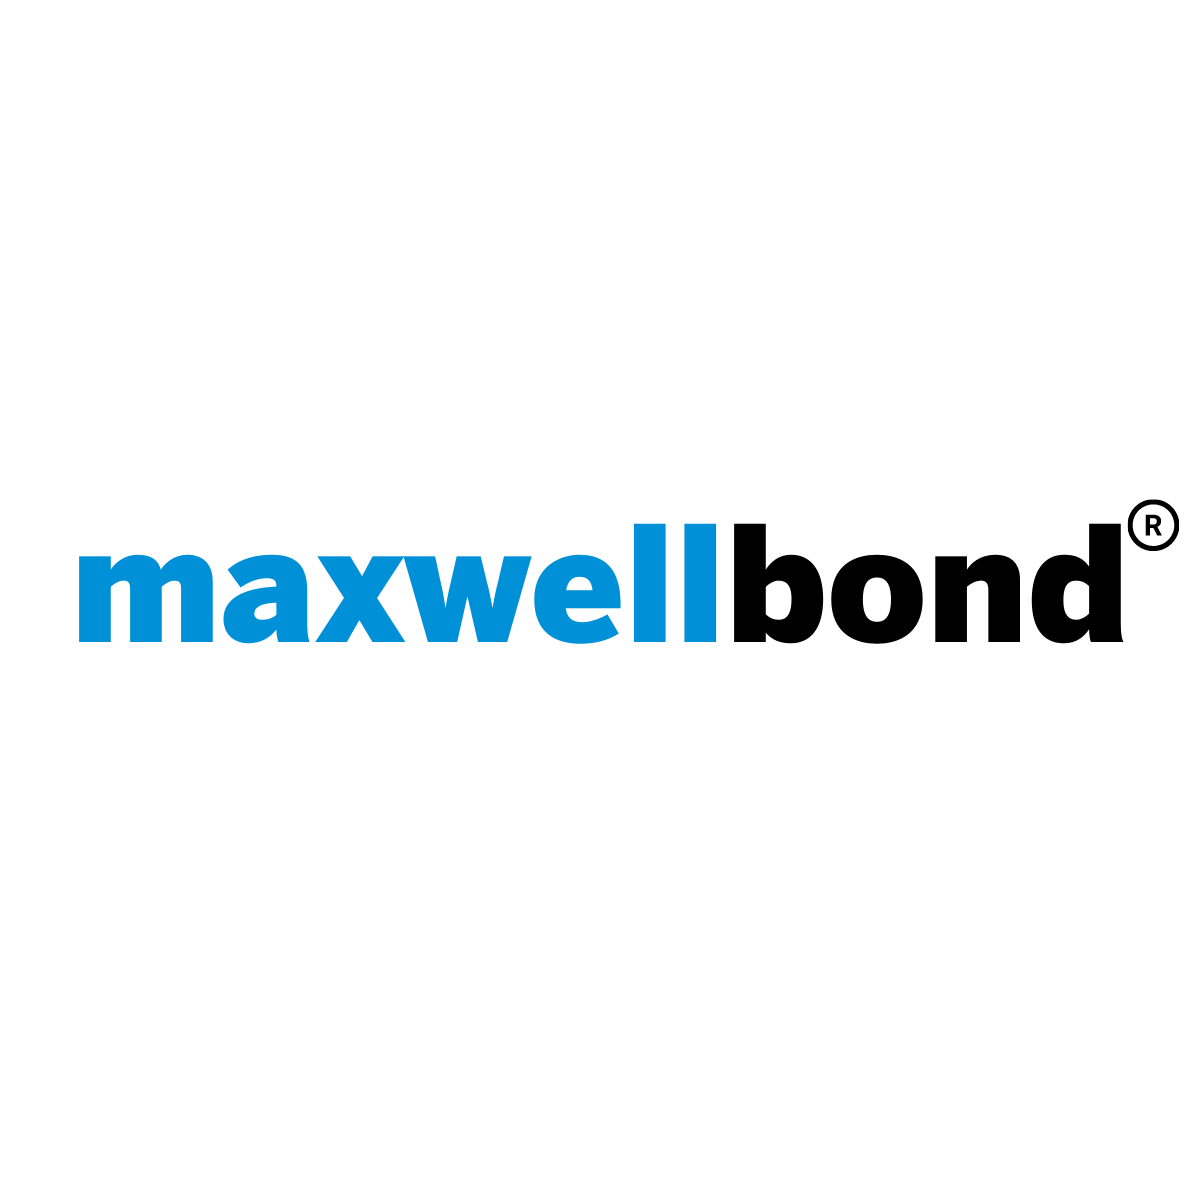 Maxwell Bond: Leadership - Medium